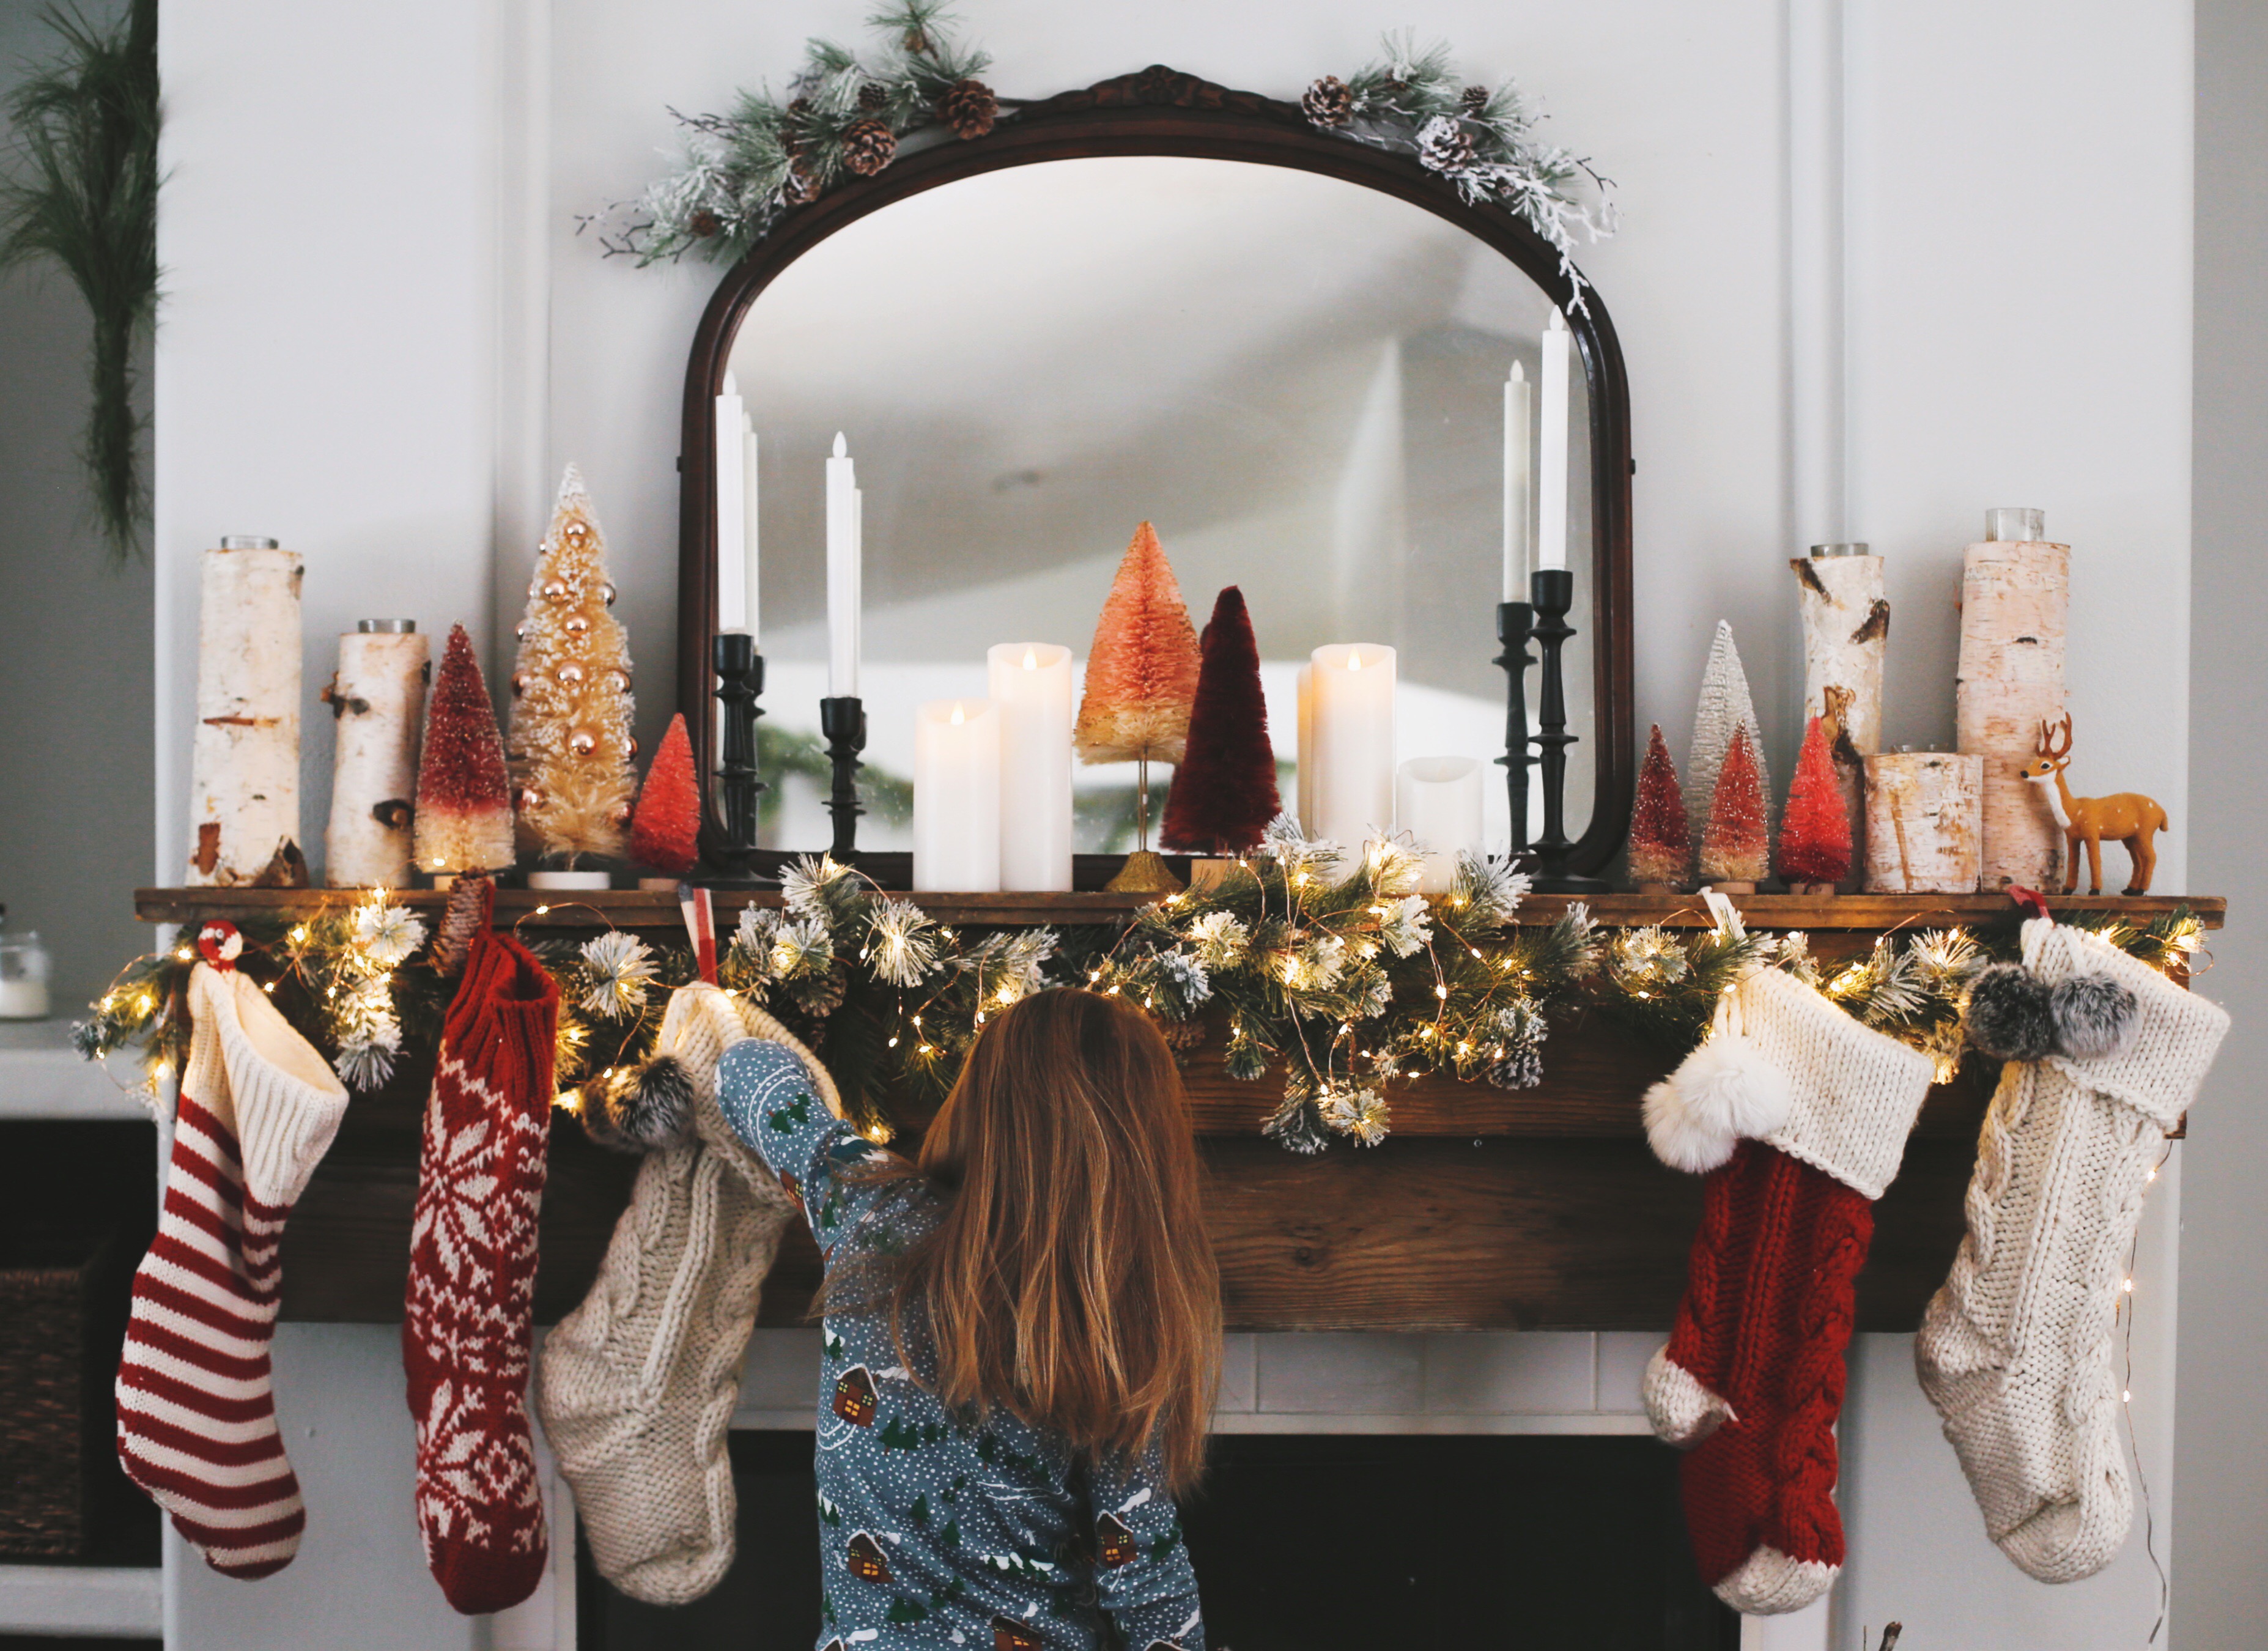 Christmas Stocking Stuffer Ideas - Imagine. Make. Believe